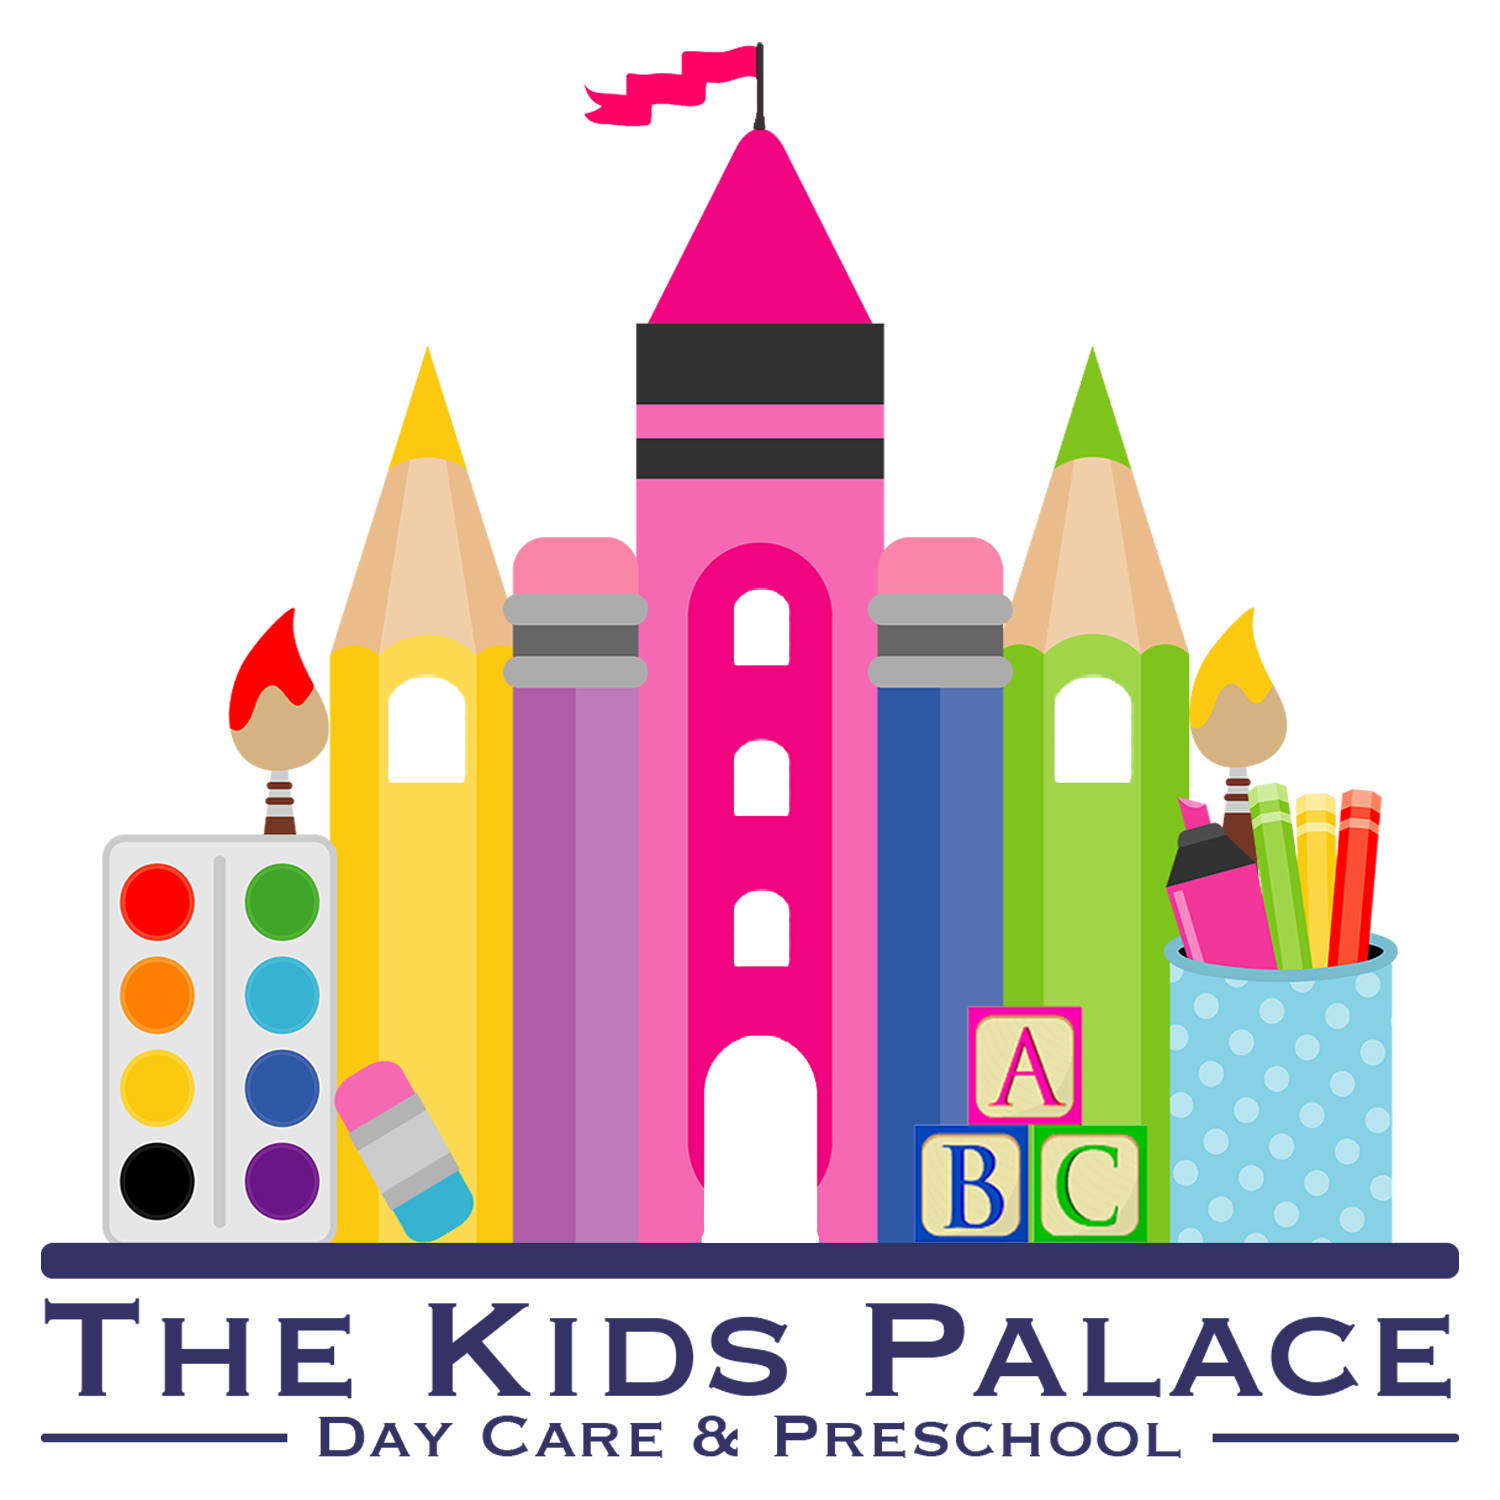 The Kids Palace